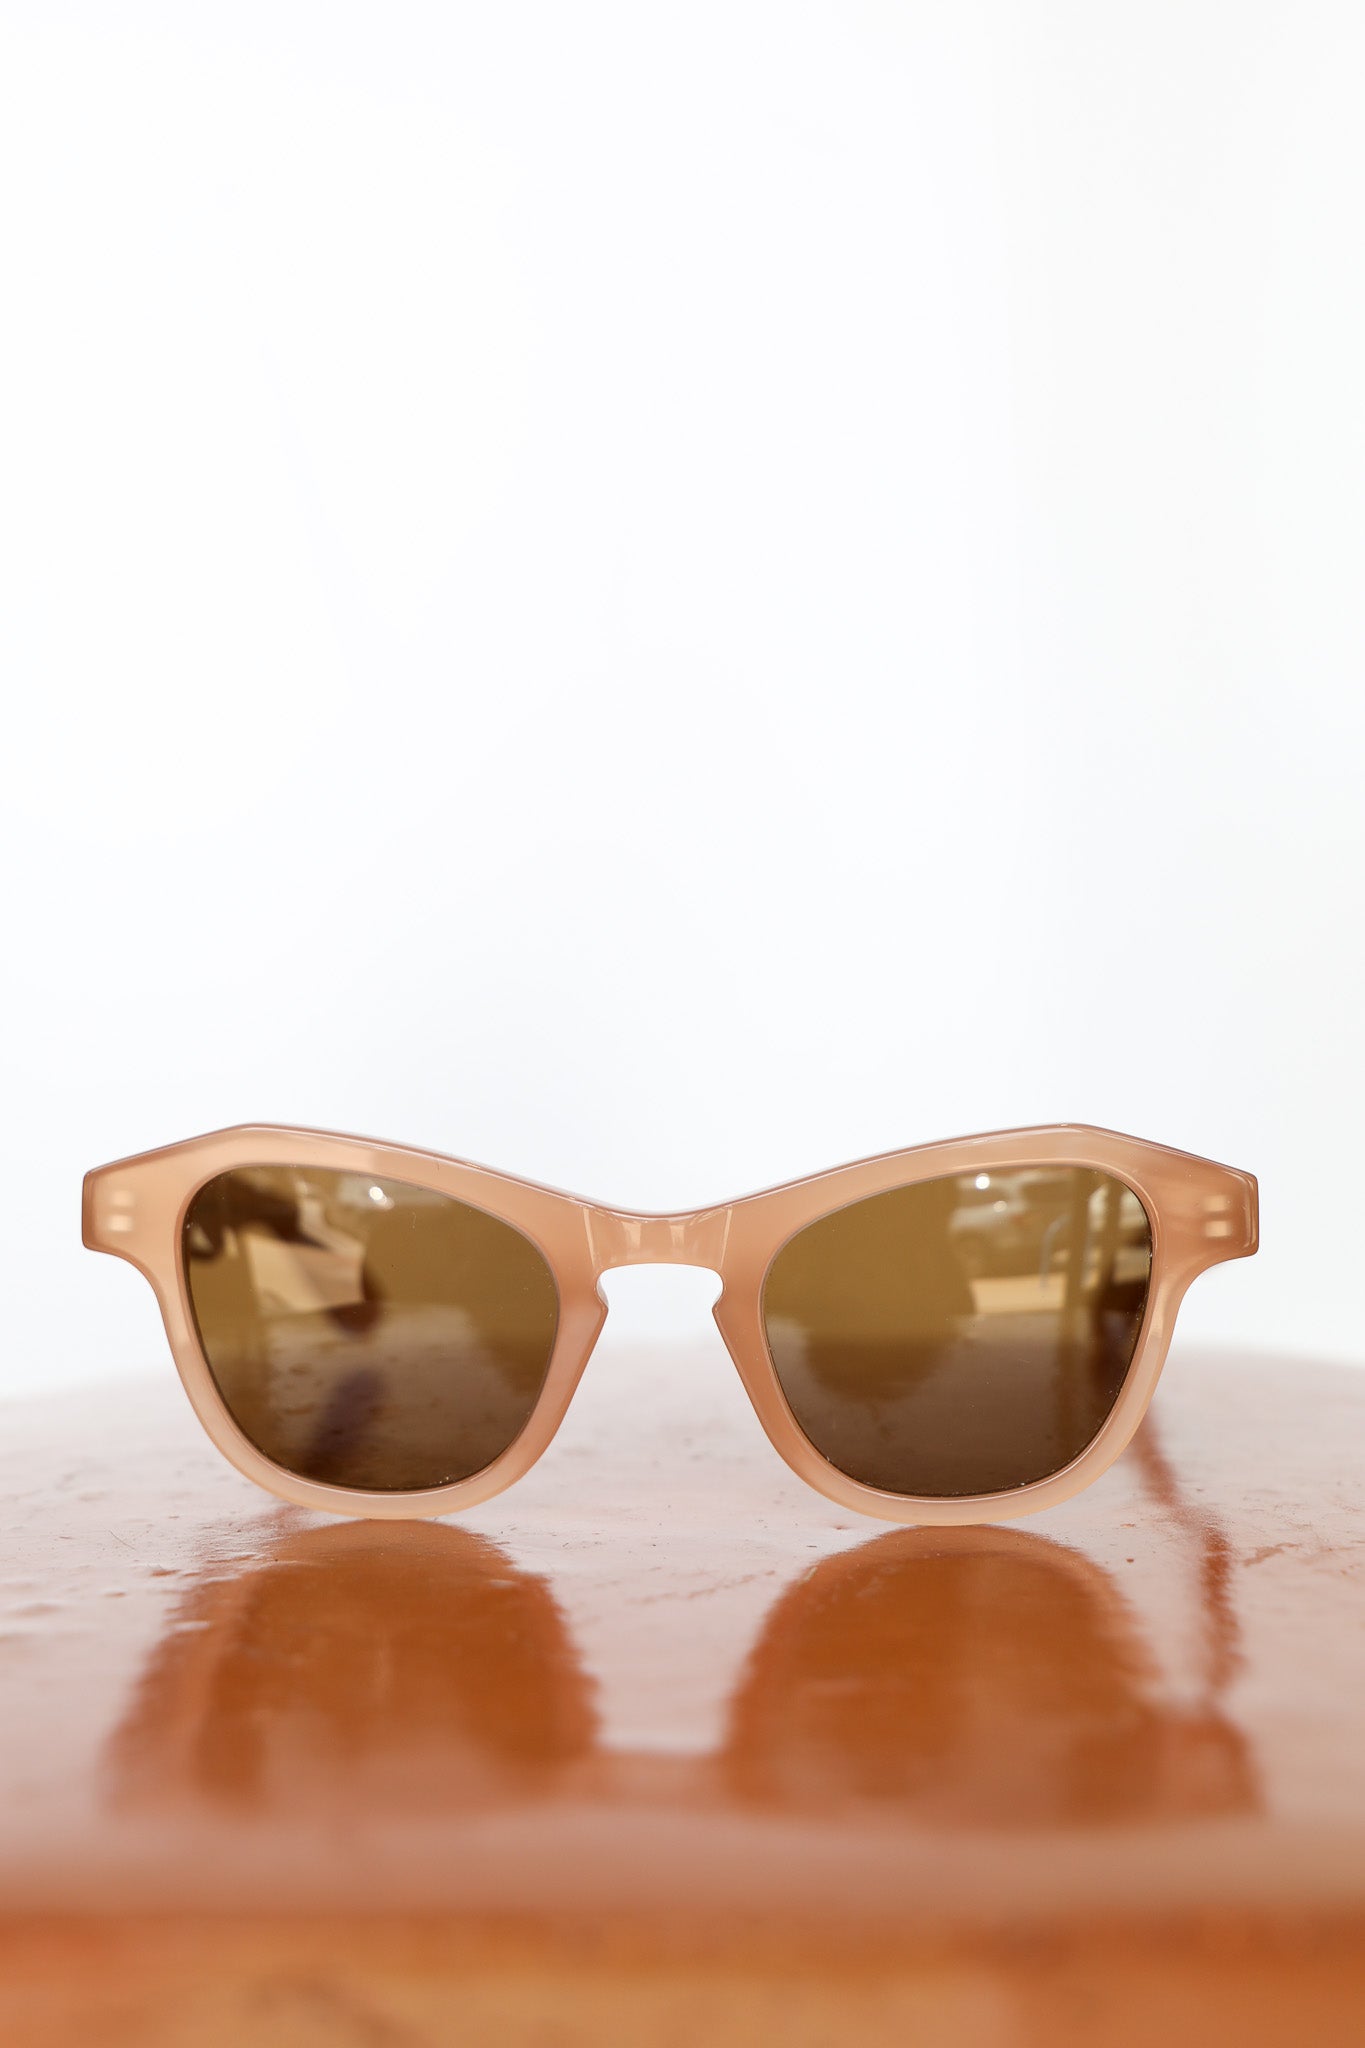 AO (C) Finch Sunglasses